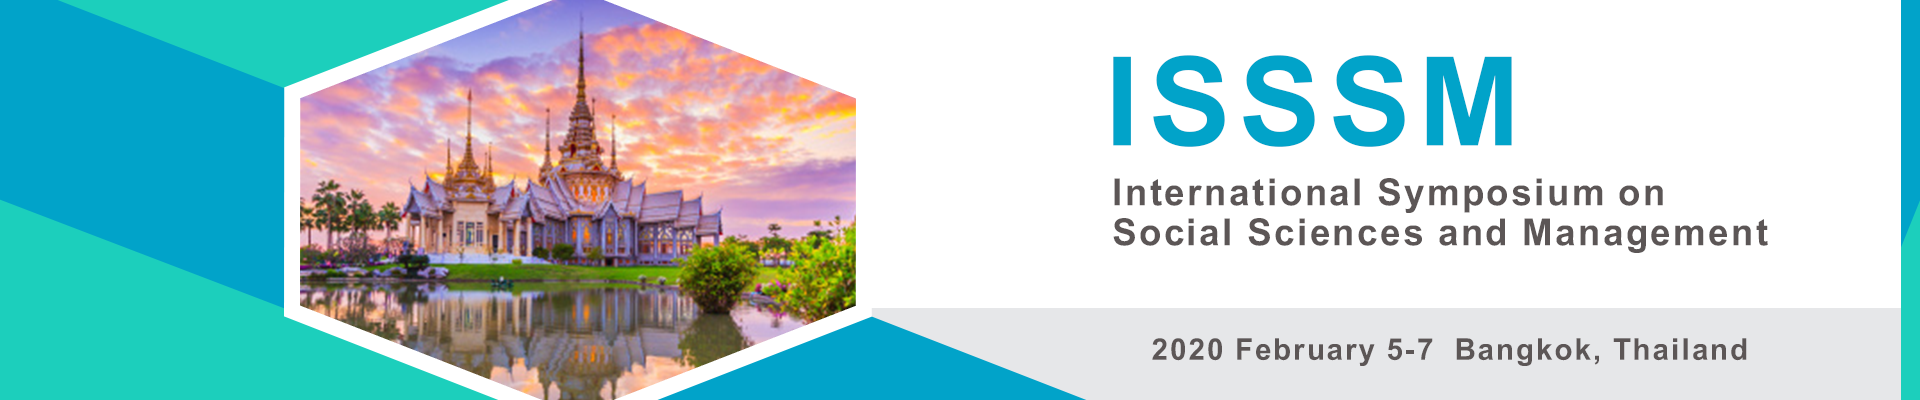 International Symposium on Social Sciences and Management (ISSSM), Bangkok, Thailand